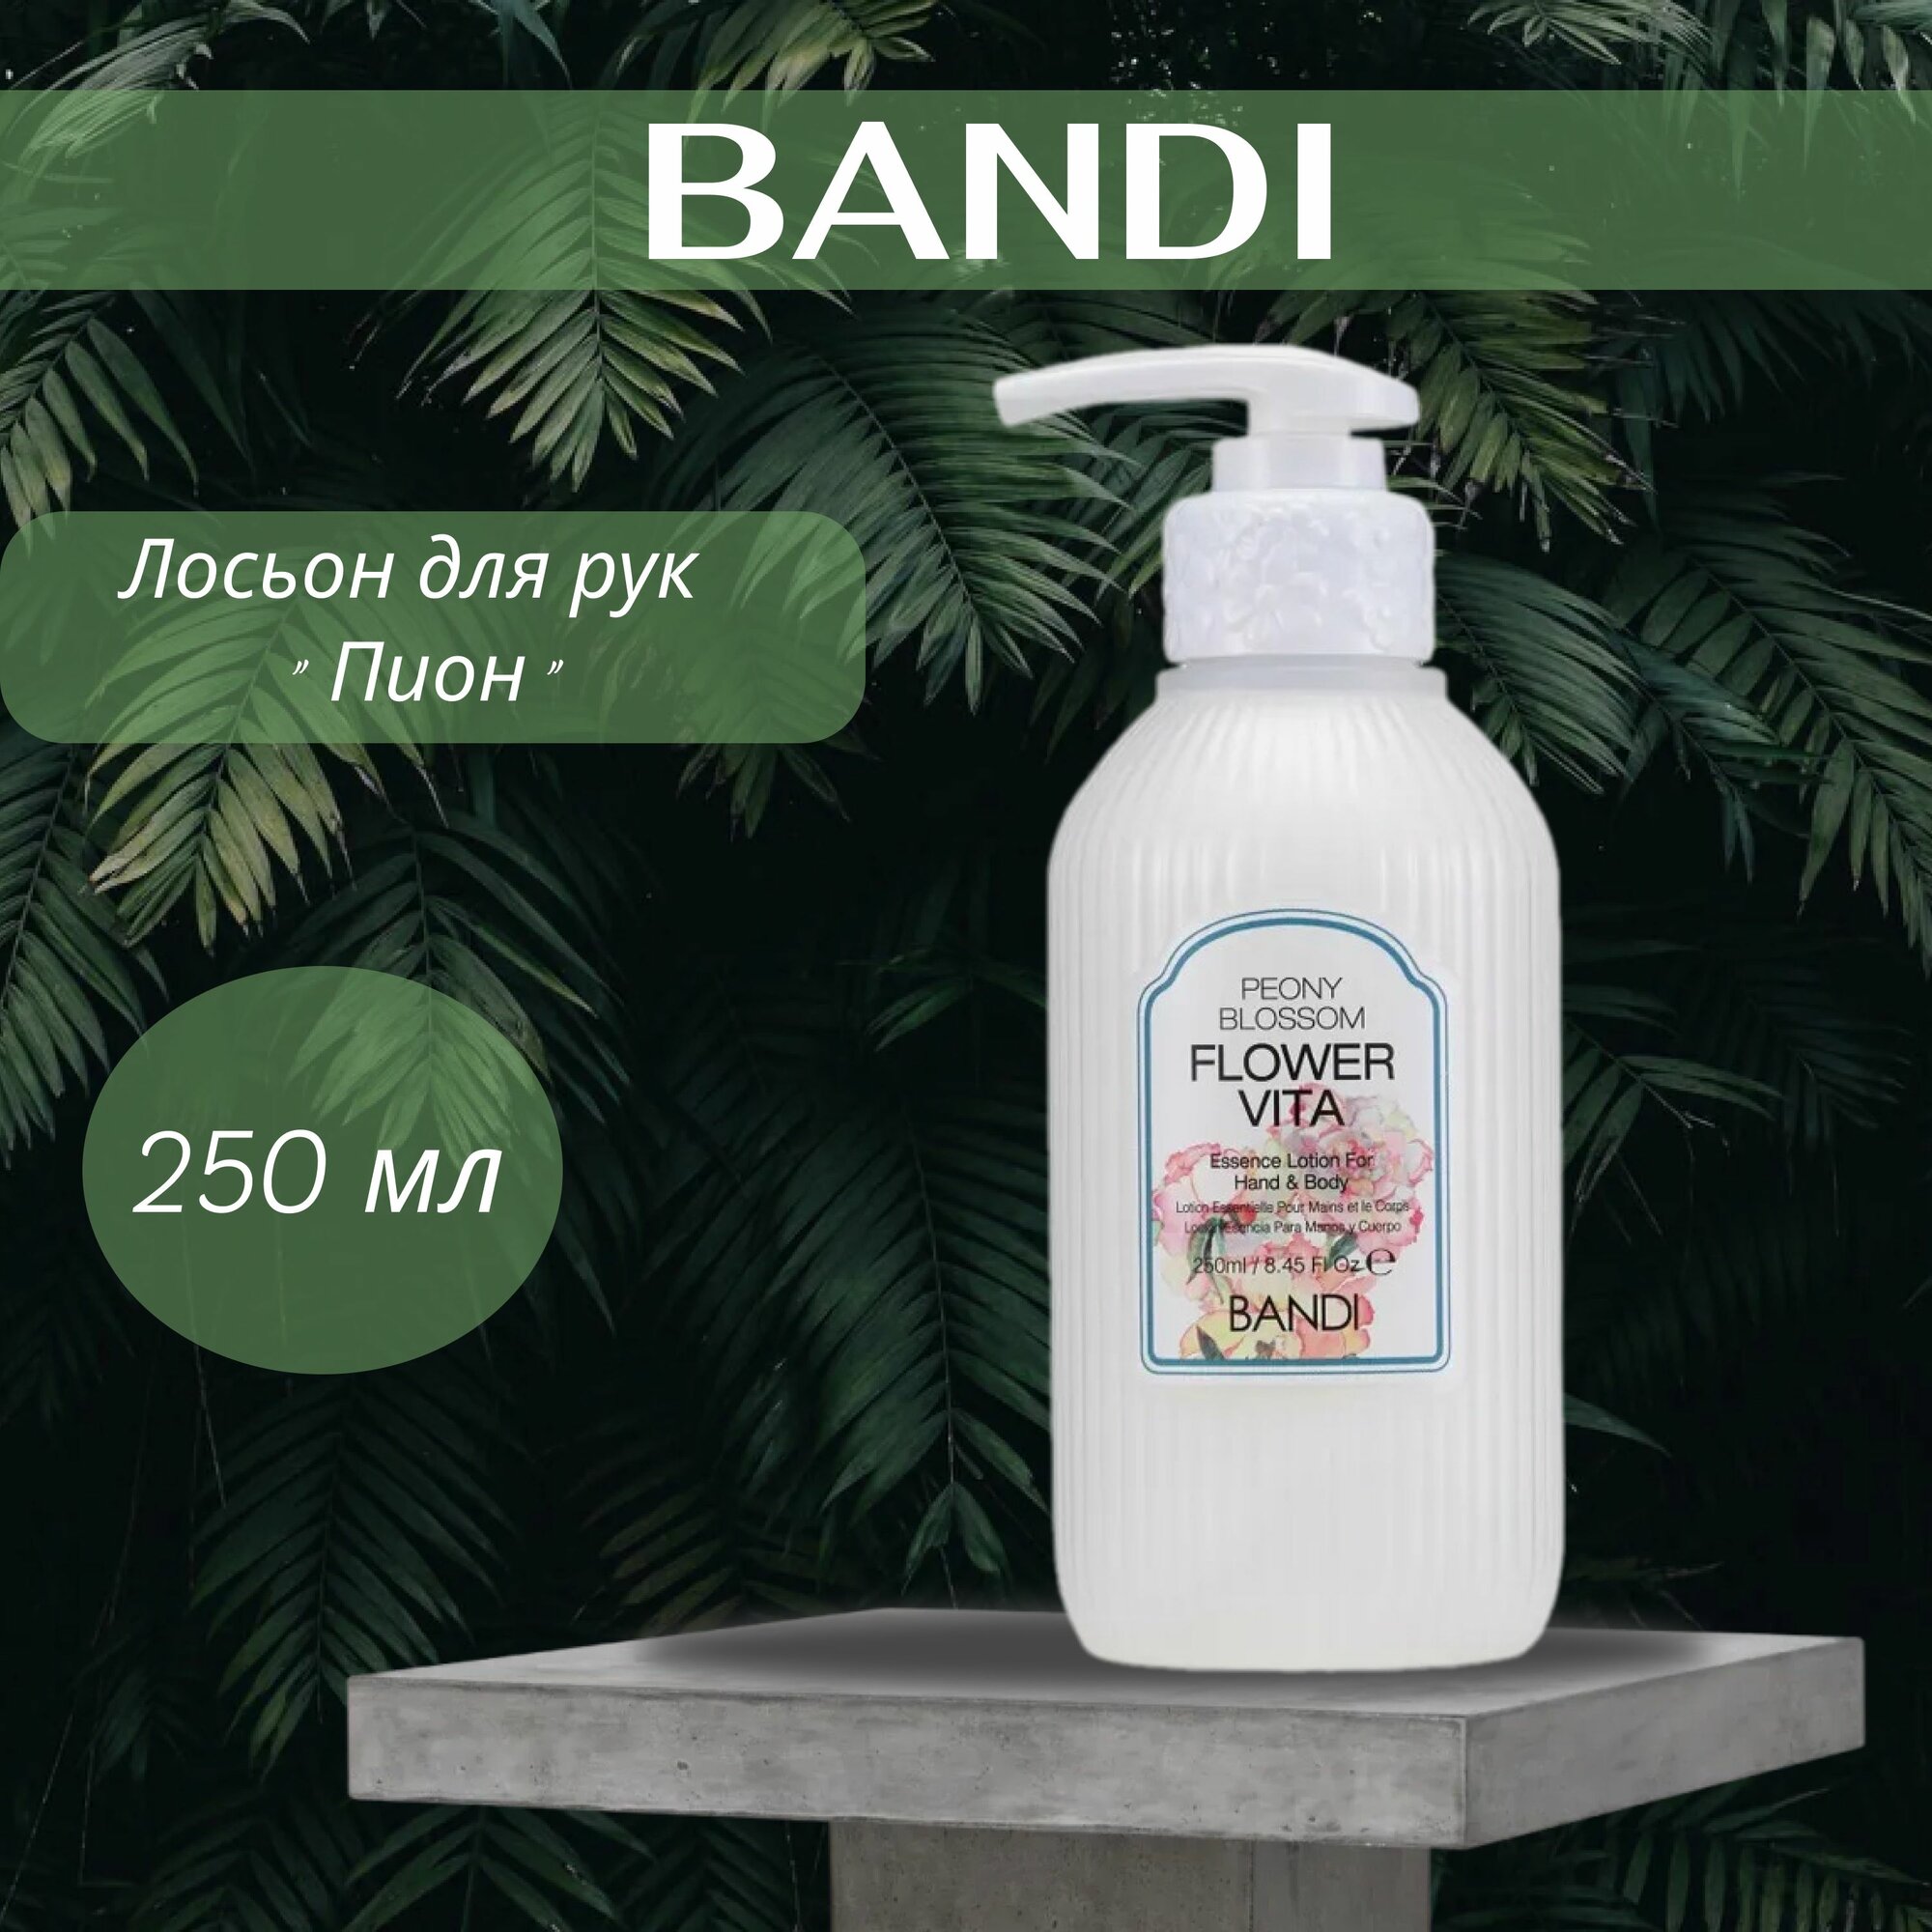 Лосьон для рук BANDI Flower Vita Essence Lotion, Peony Blossom, Пион, 250 мл